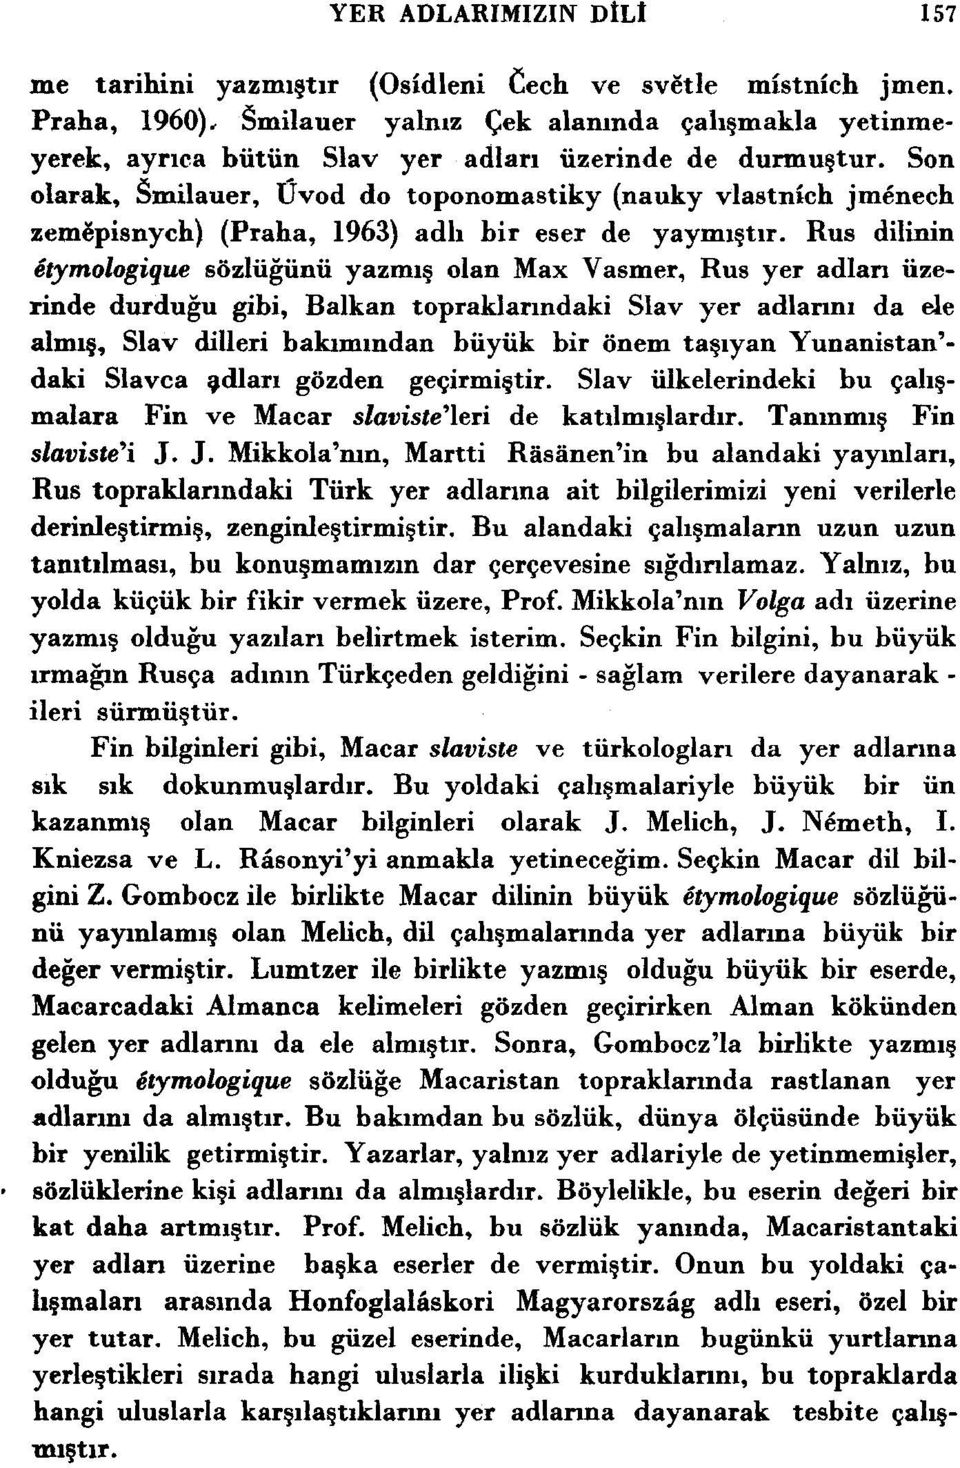 Son olarak, Smilauer, Ovod do toponomastiky (nauky vlastnich jmknech zemtipisnych) (Praha, 1963) ad11 bir eser de yaymigtir.